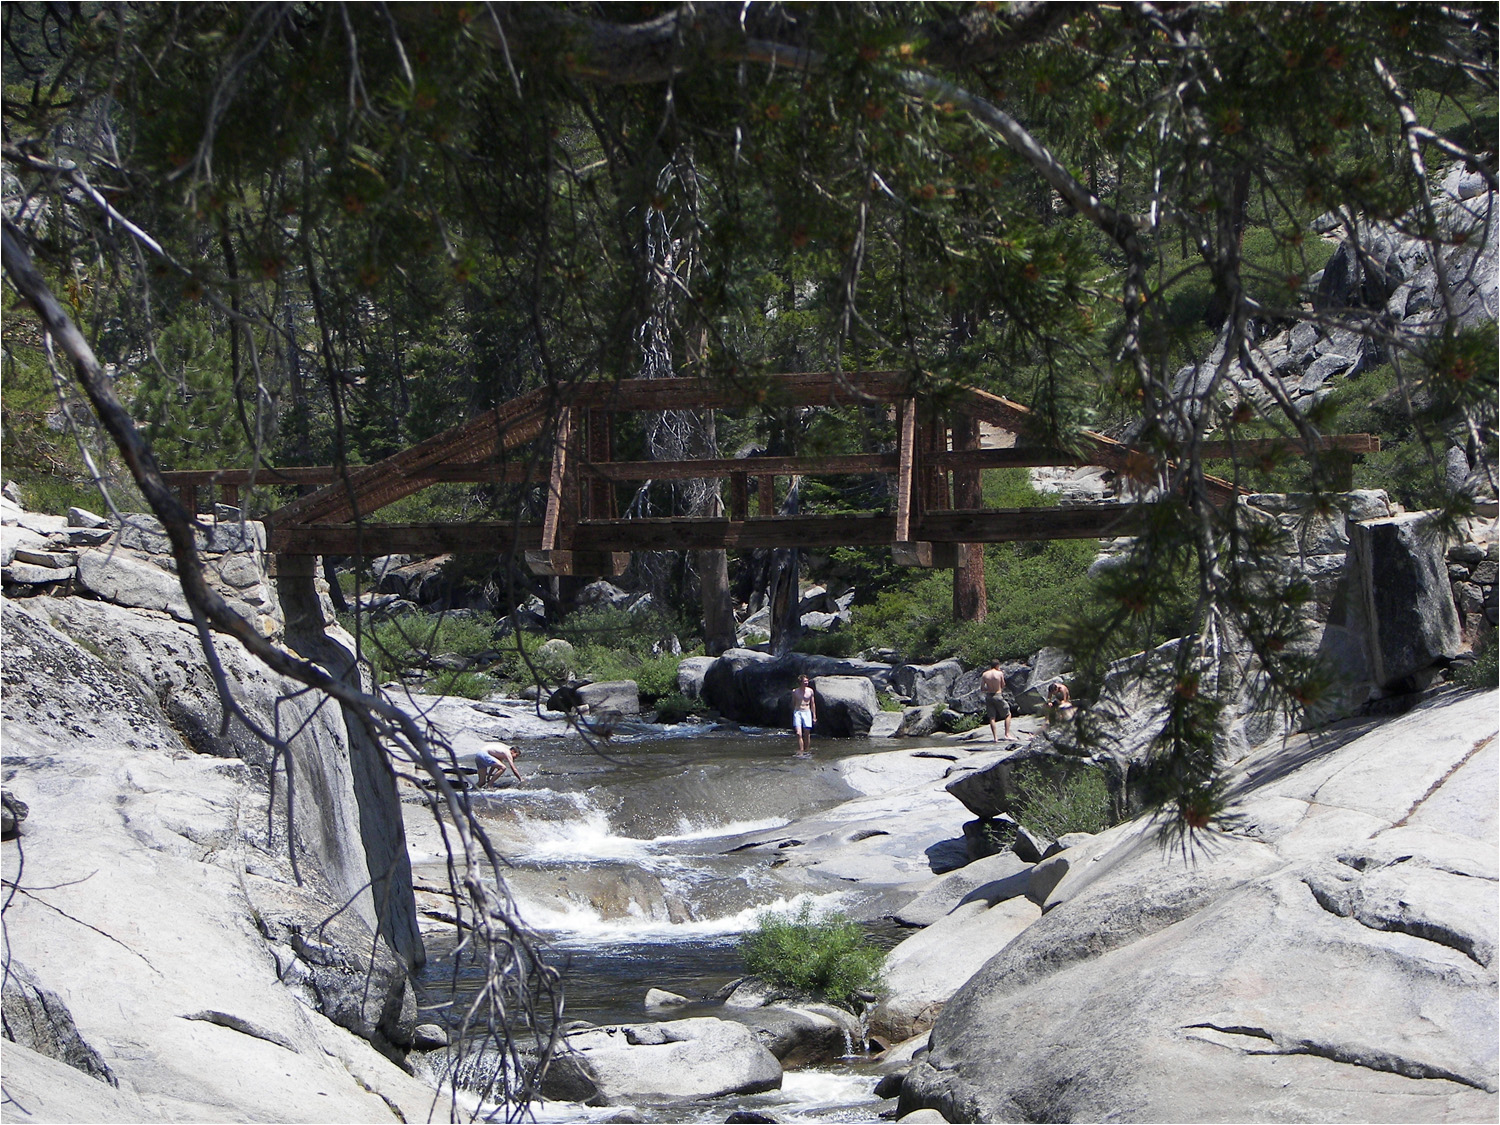 Upper Yosemite Falls Hike- Bridge crossing 100 yards upstream of falls.